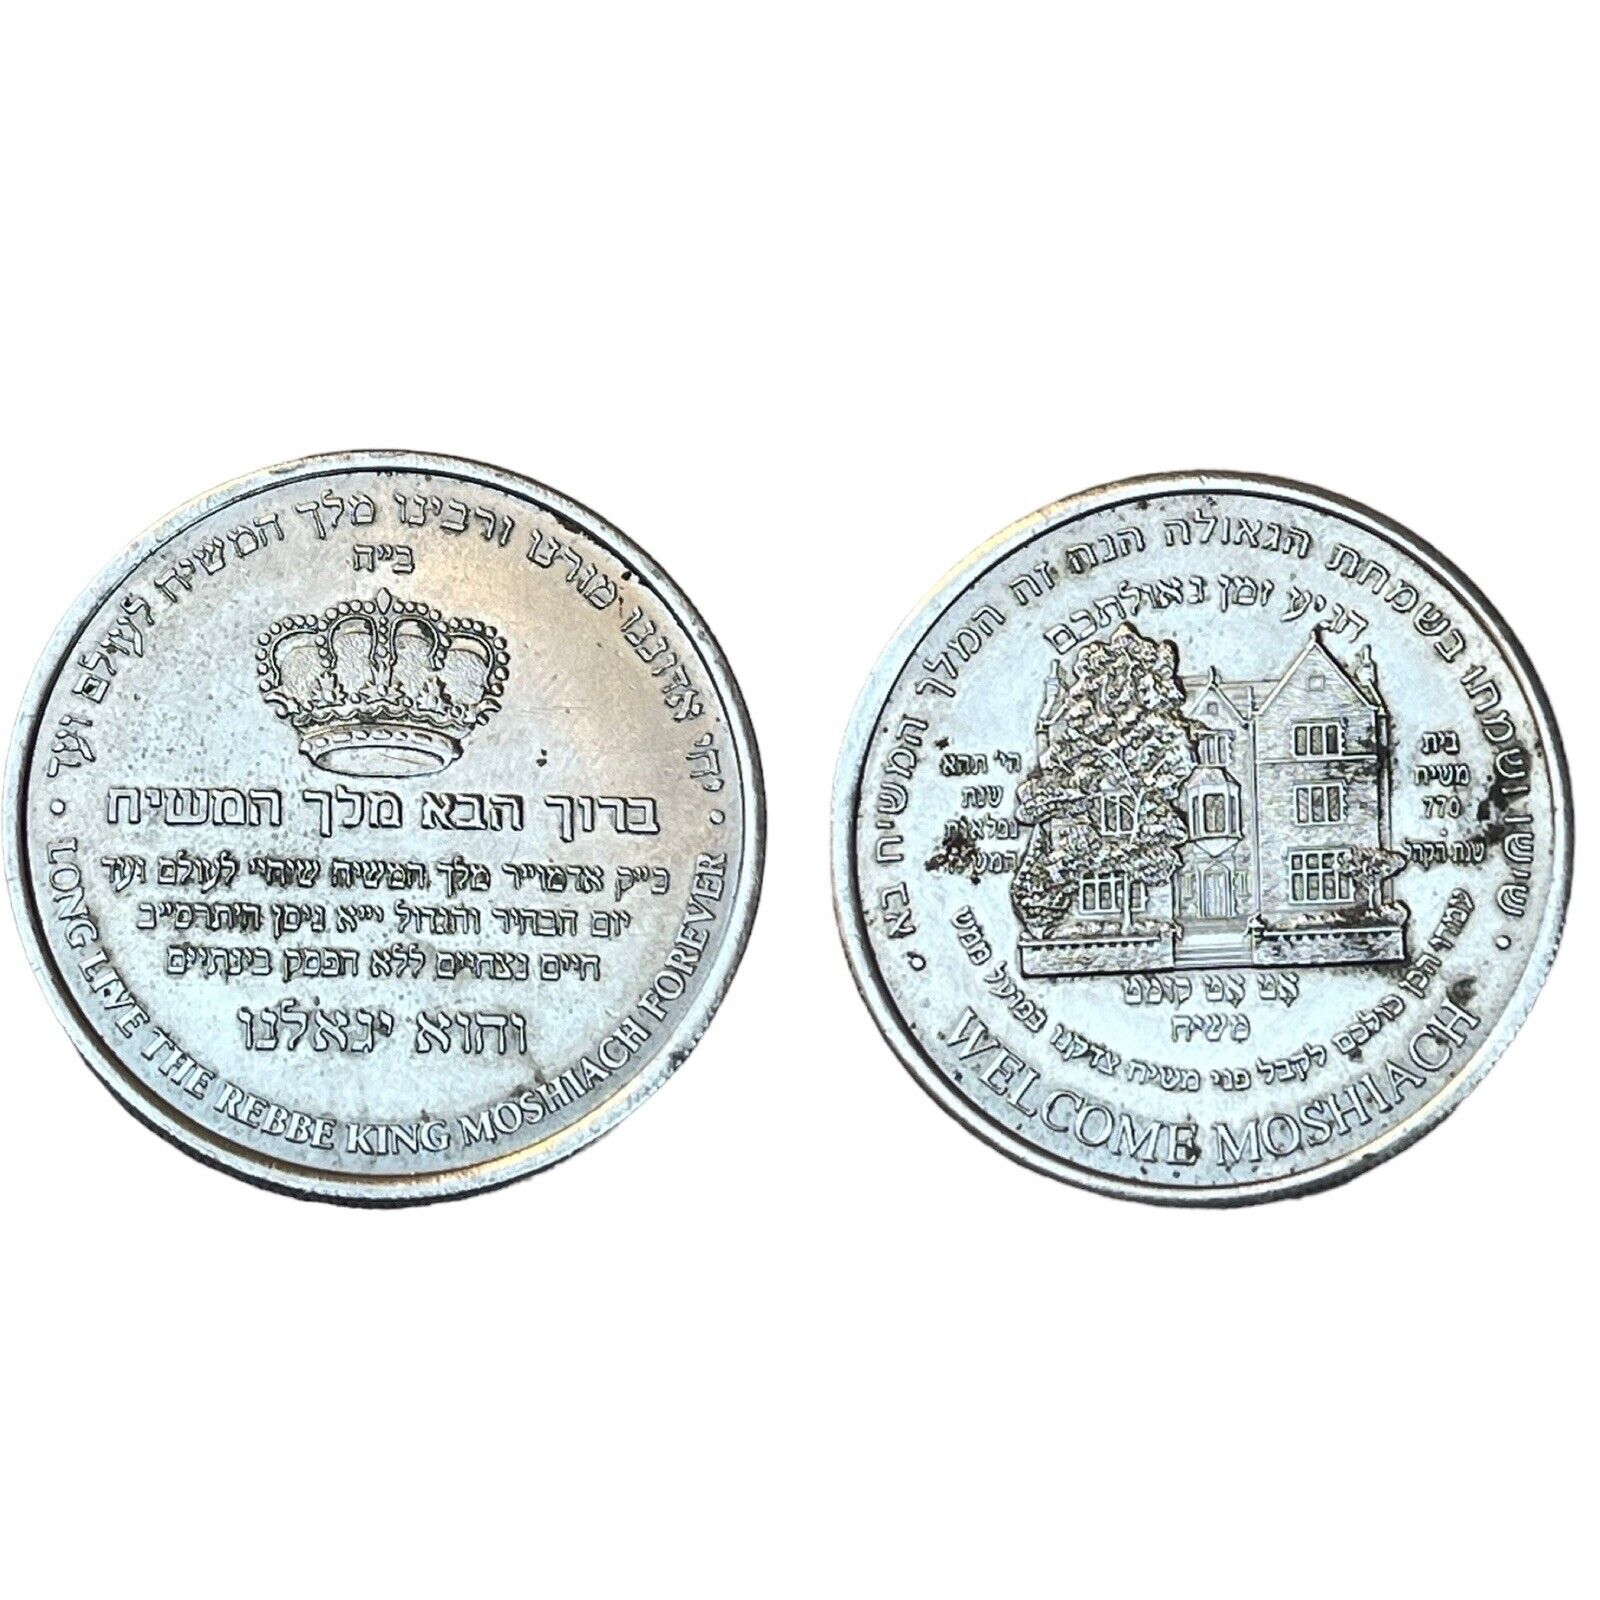 Rare Chabad medallion Rabbi Lubavitcher Shnat HaKahal (1995) Lubavich 770 Amulet